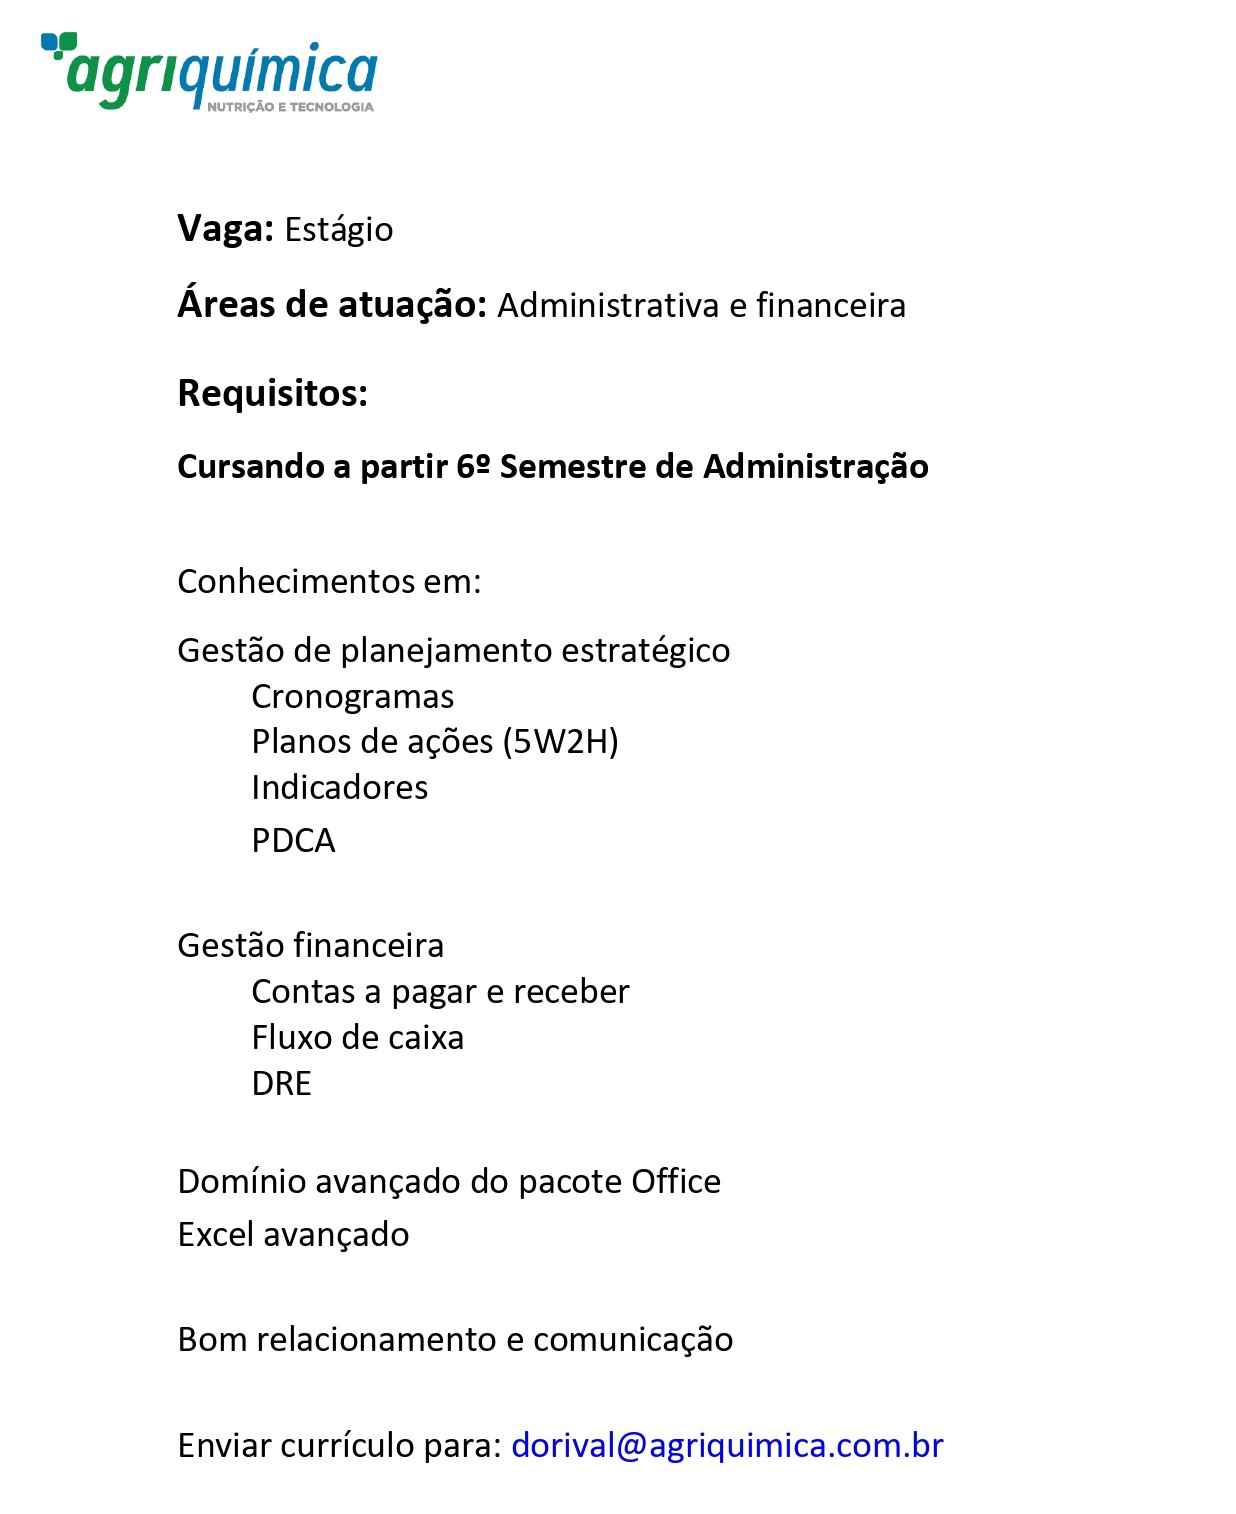 Agriquímica_Administração_page-0001.jpg